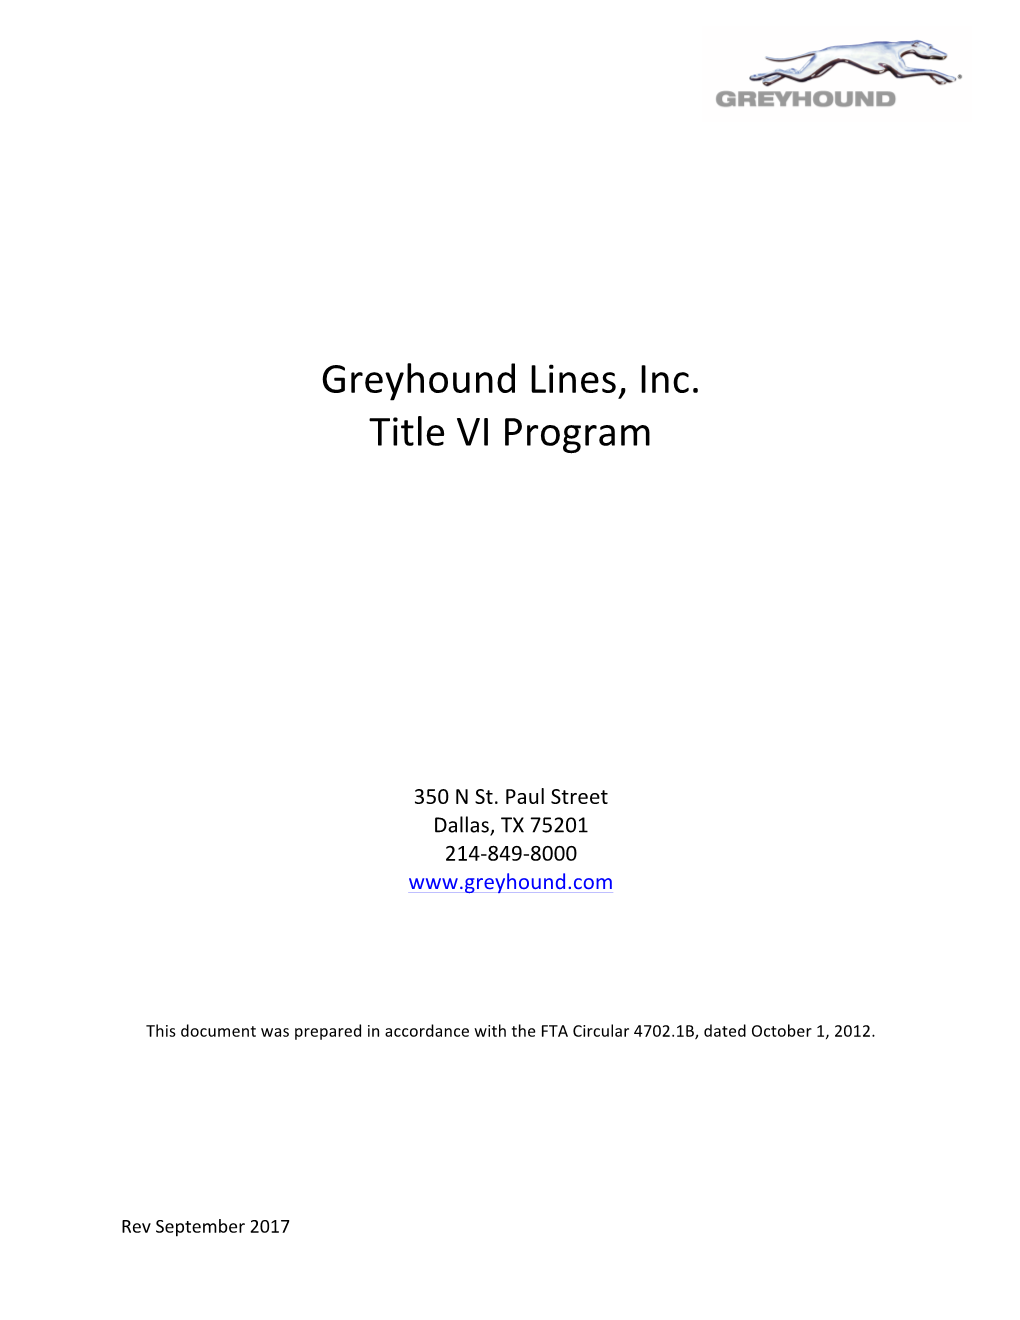 Greyhound Lines, Inc. Title VI Program